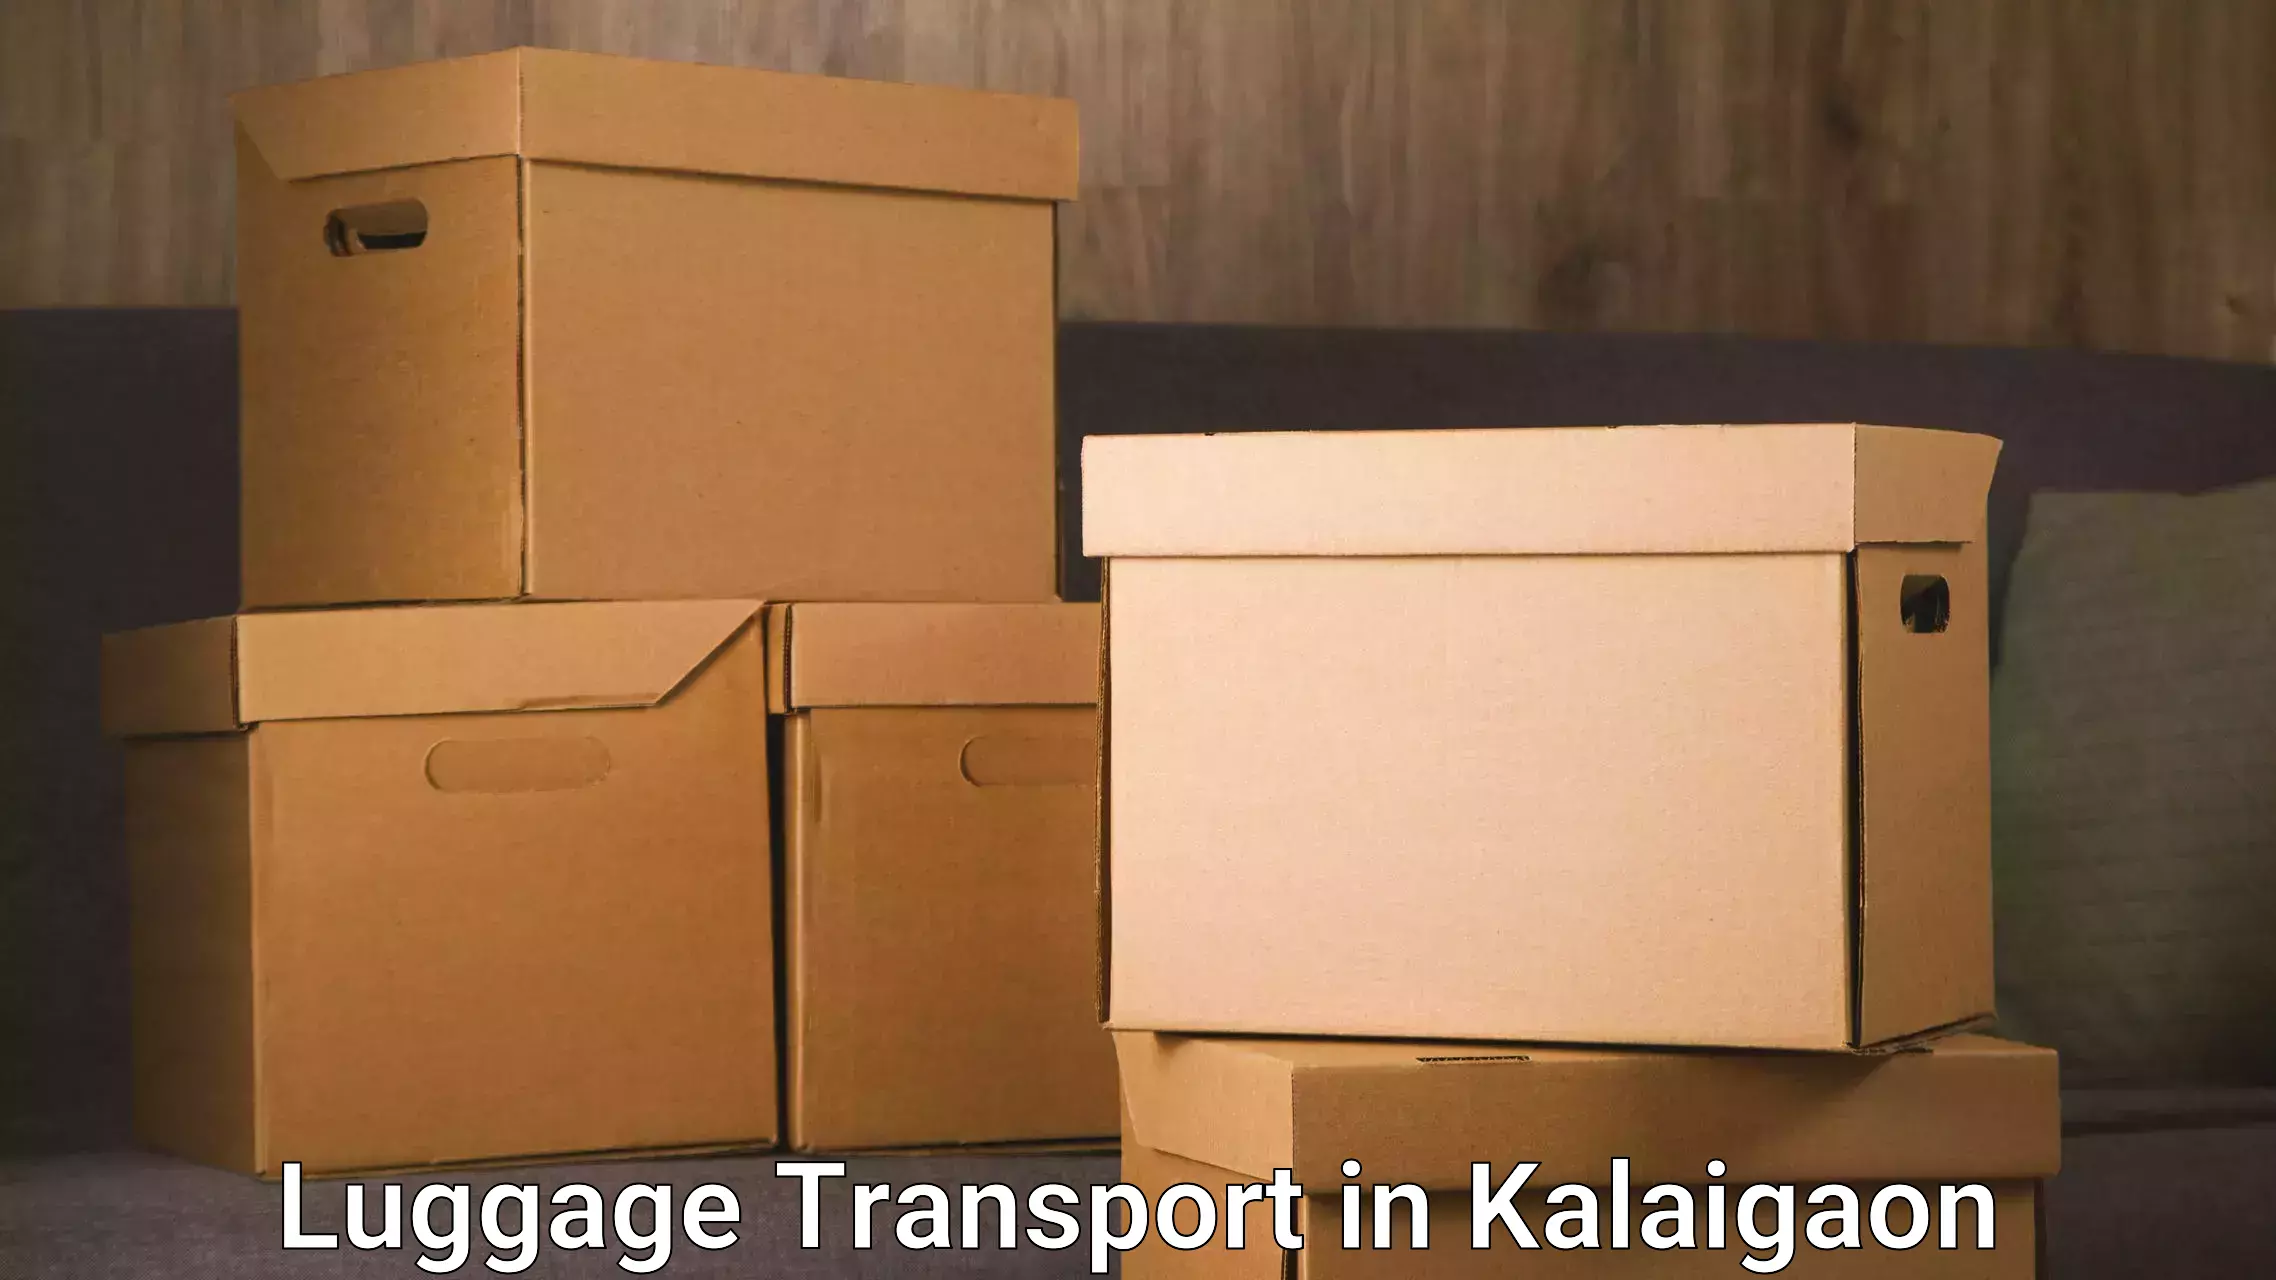 Luggage shipment tracking in Kalaigaon